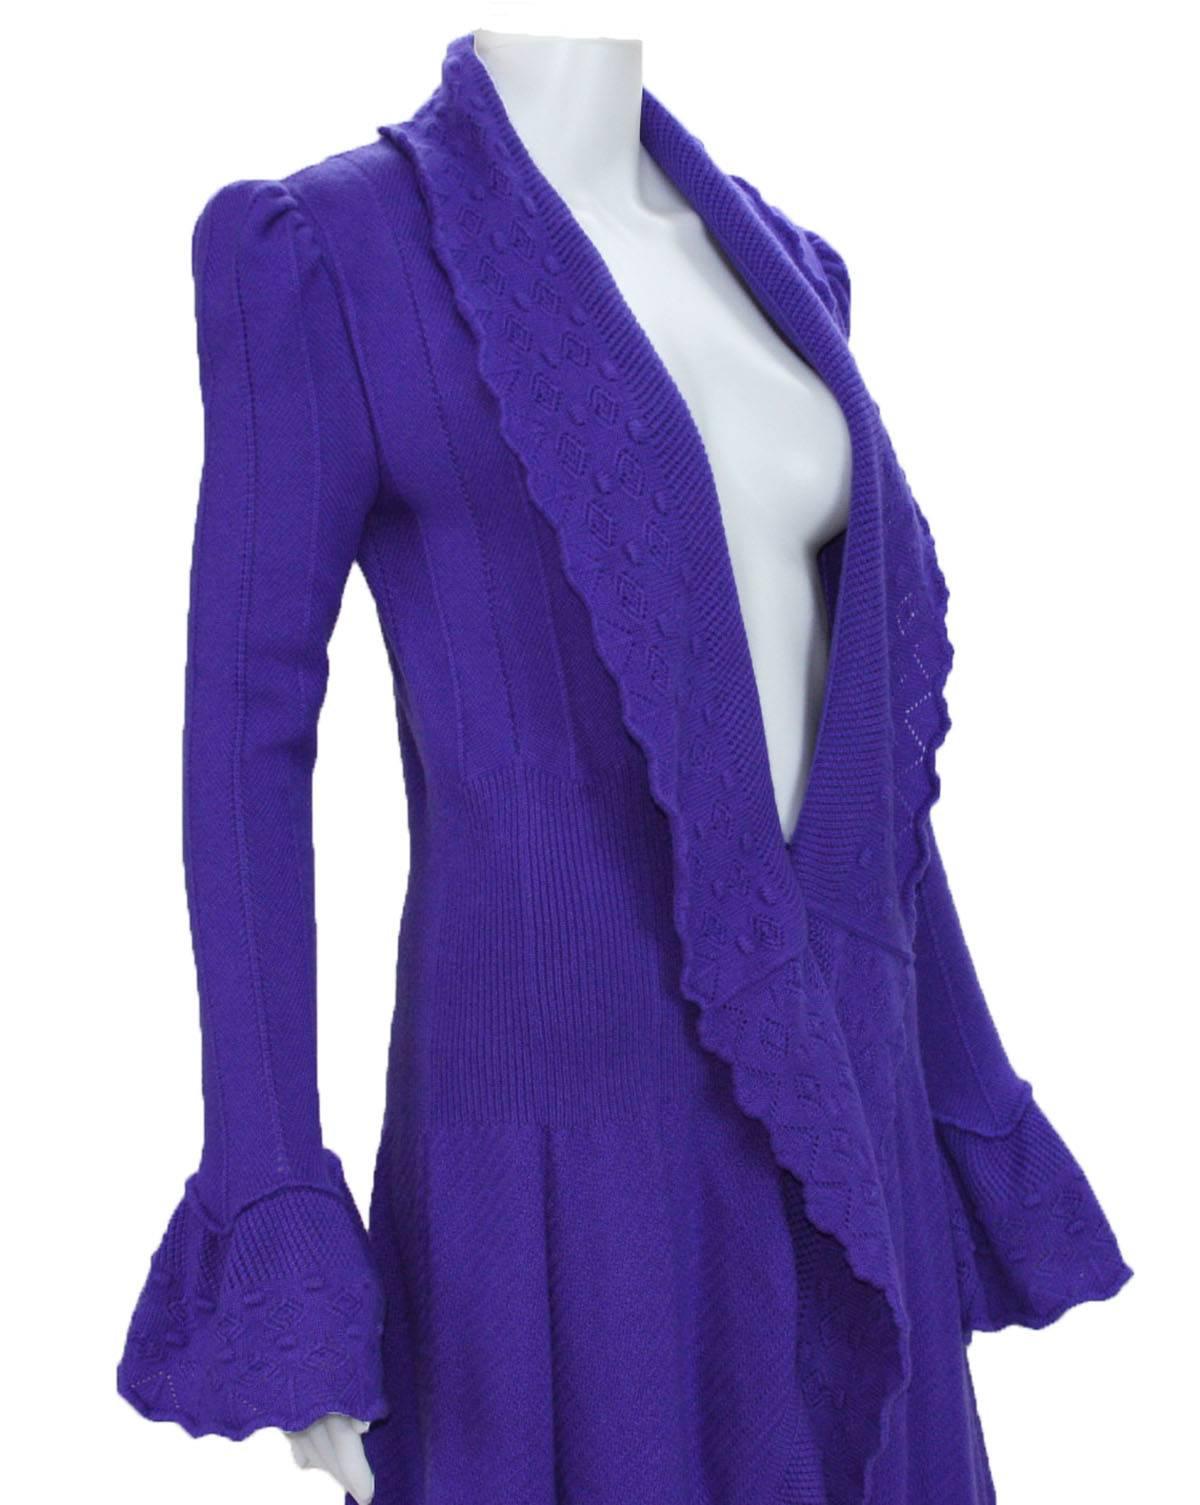 Women's New $3090 Oscar de la Renta 100% Cashmere Ruffled Purple Long Cardigan Coat